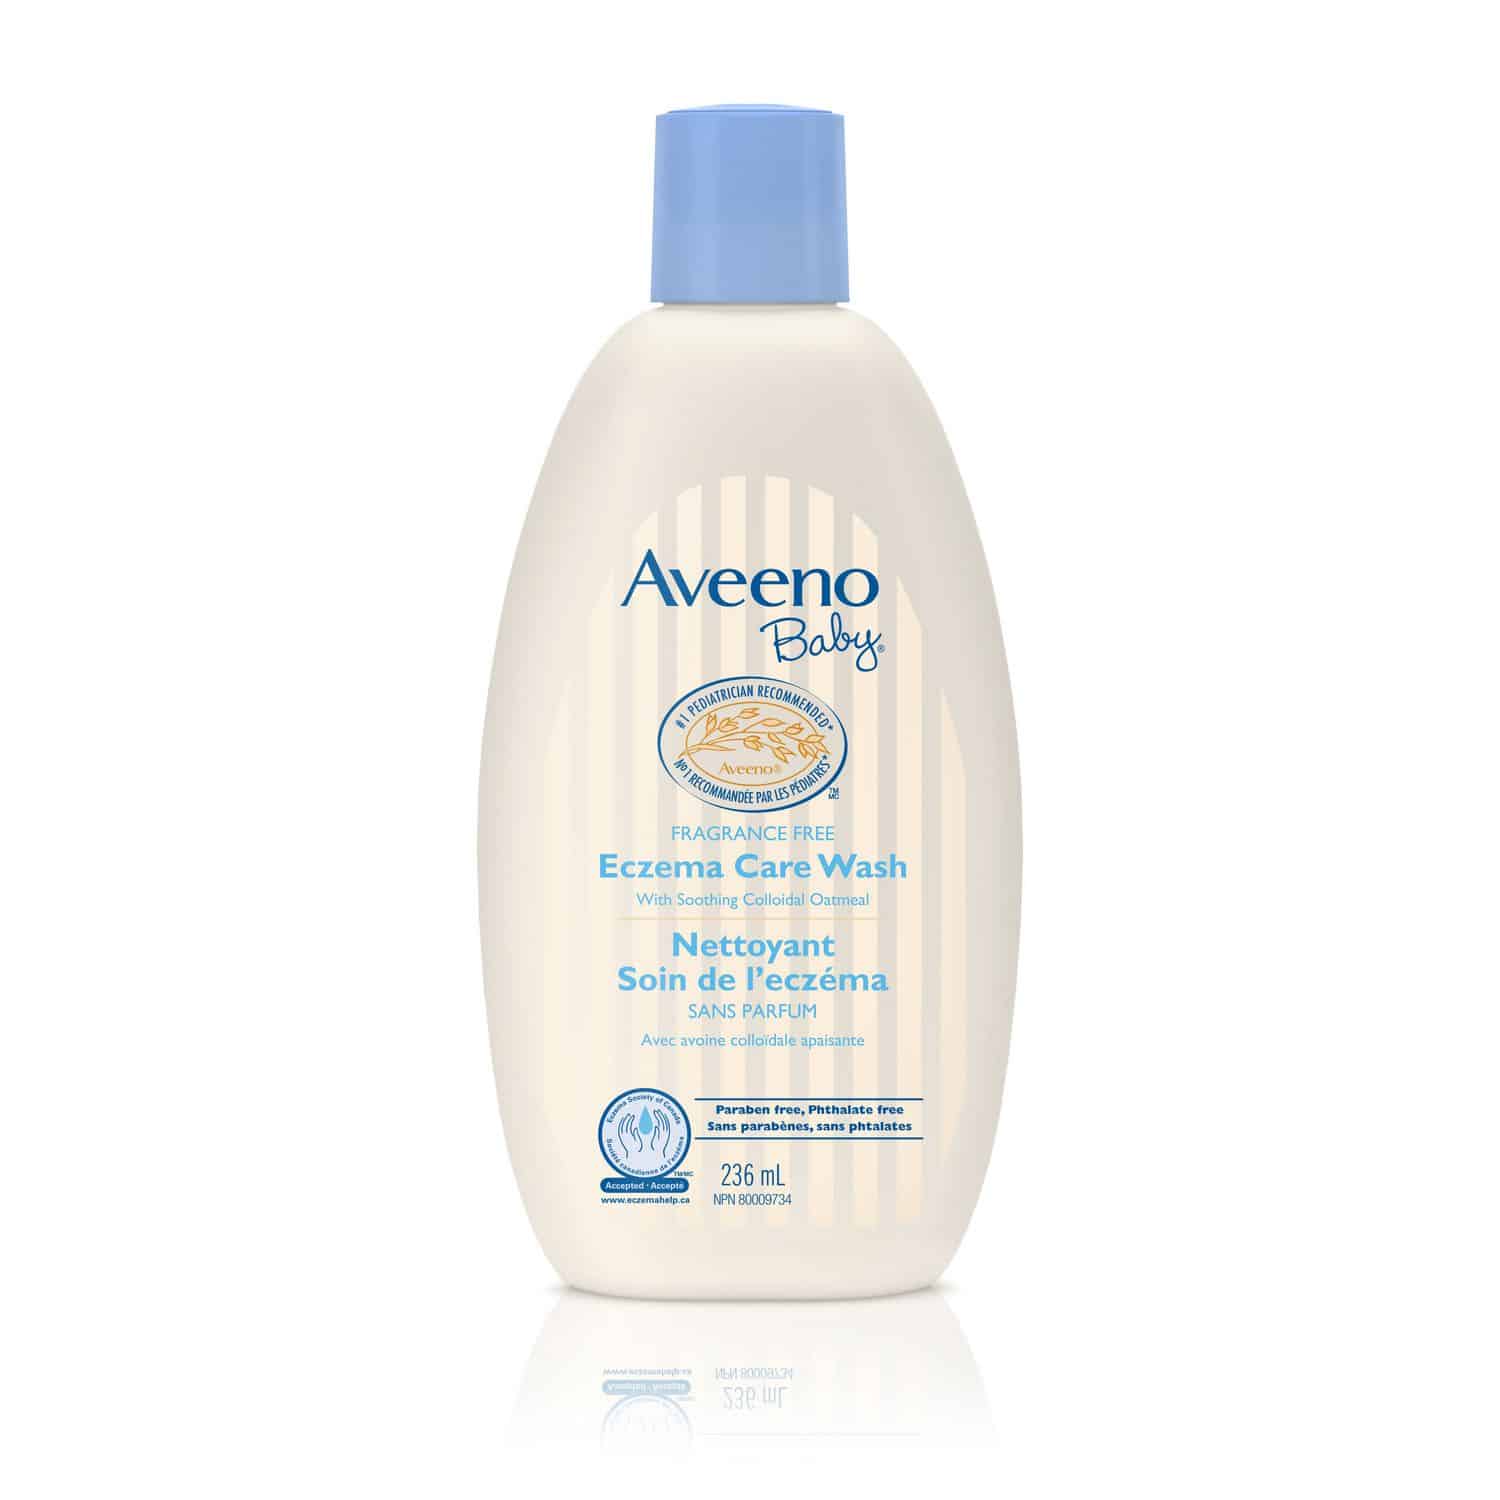 Aveeno Baby Eczema Care Wash with Colloidal Oatmeal